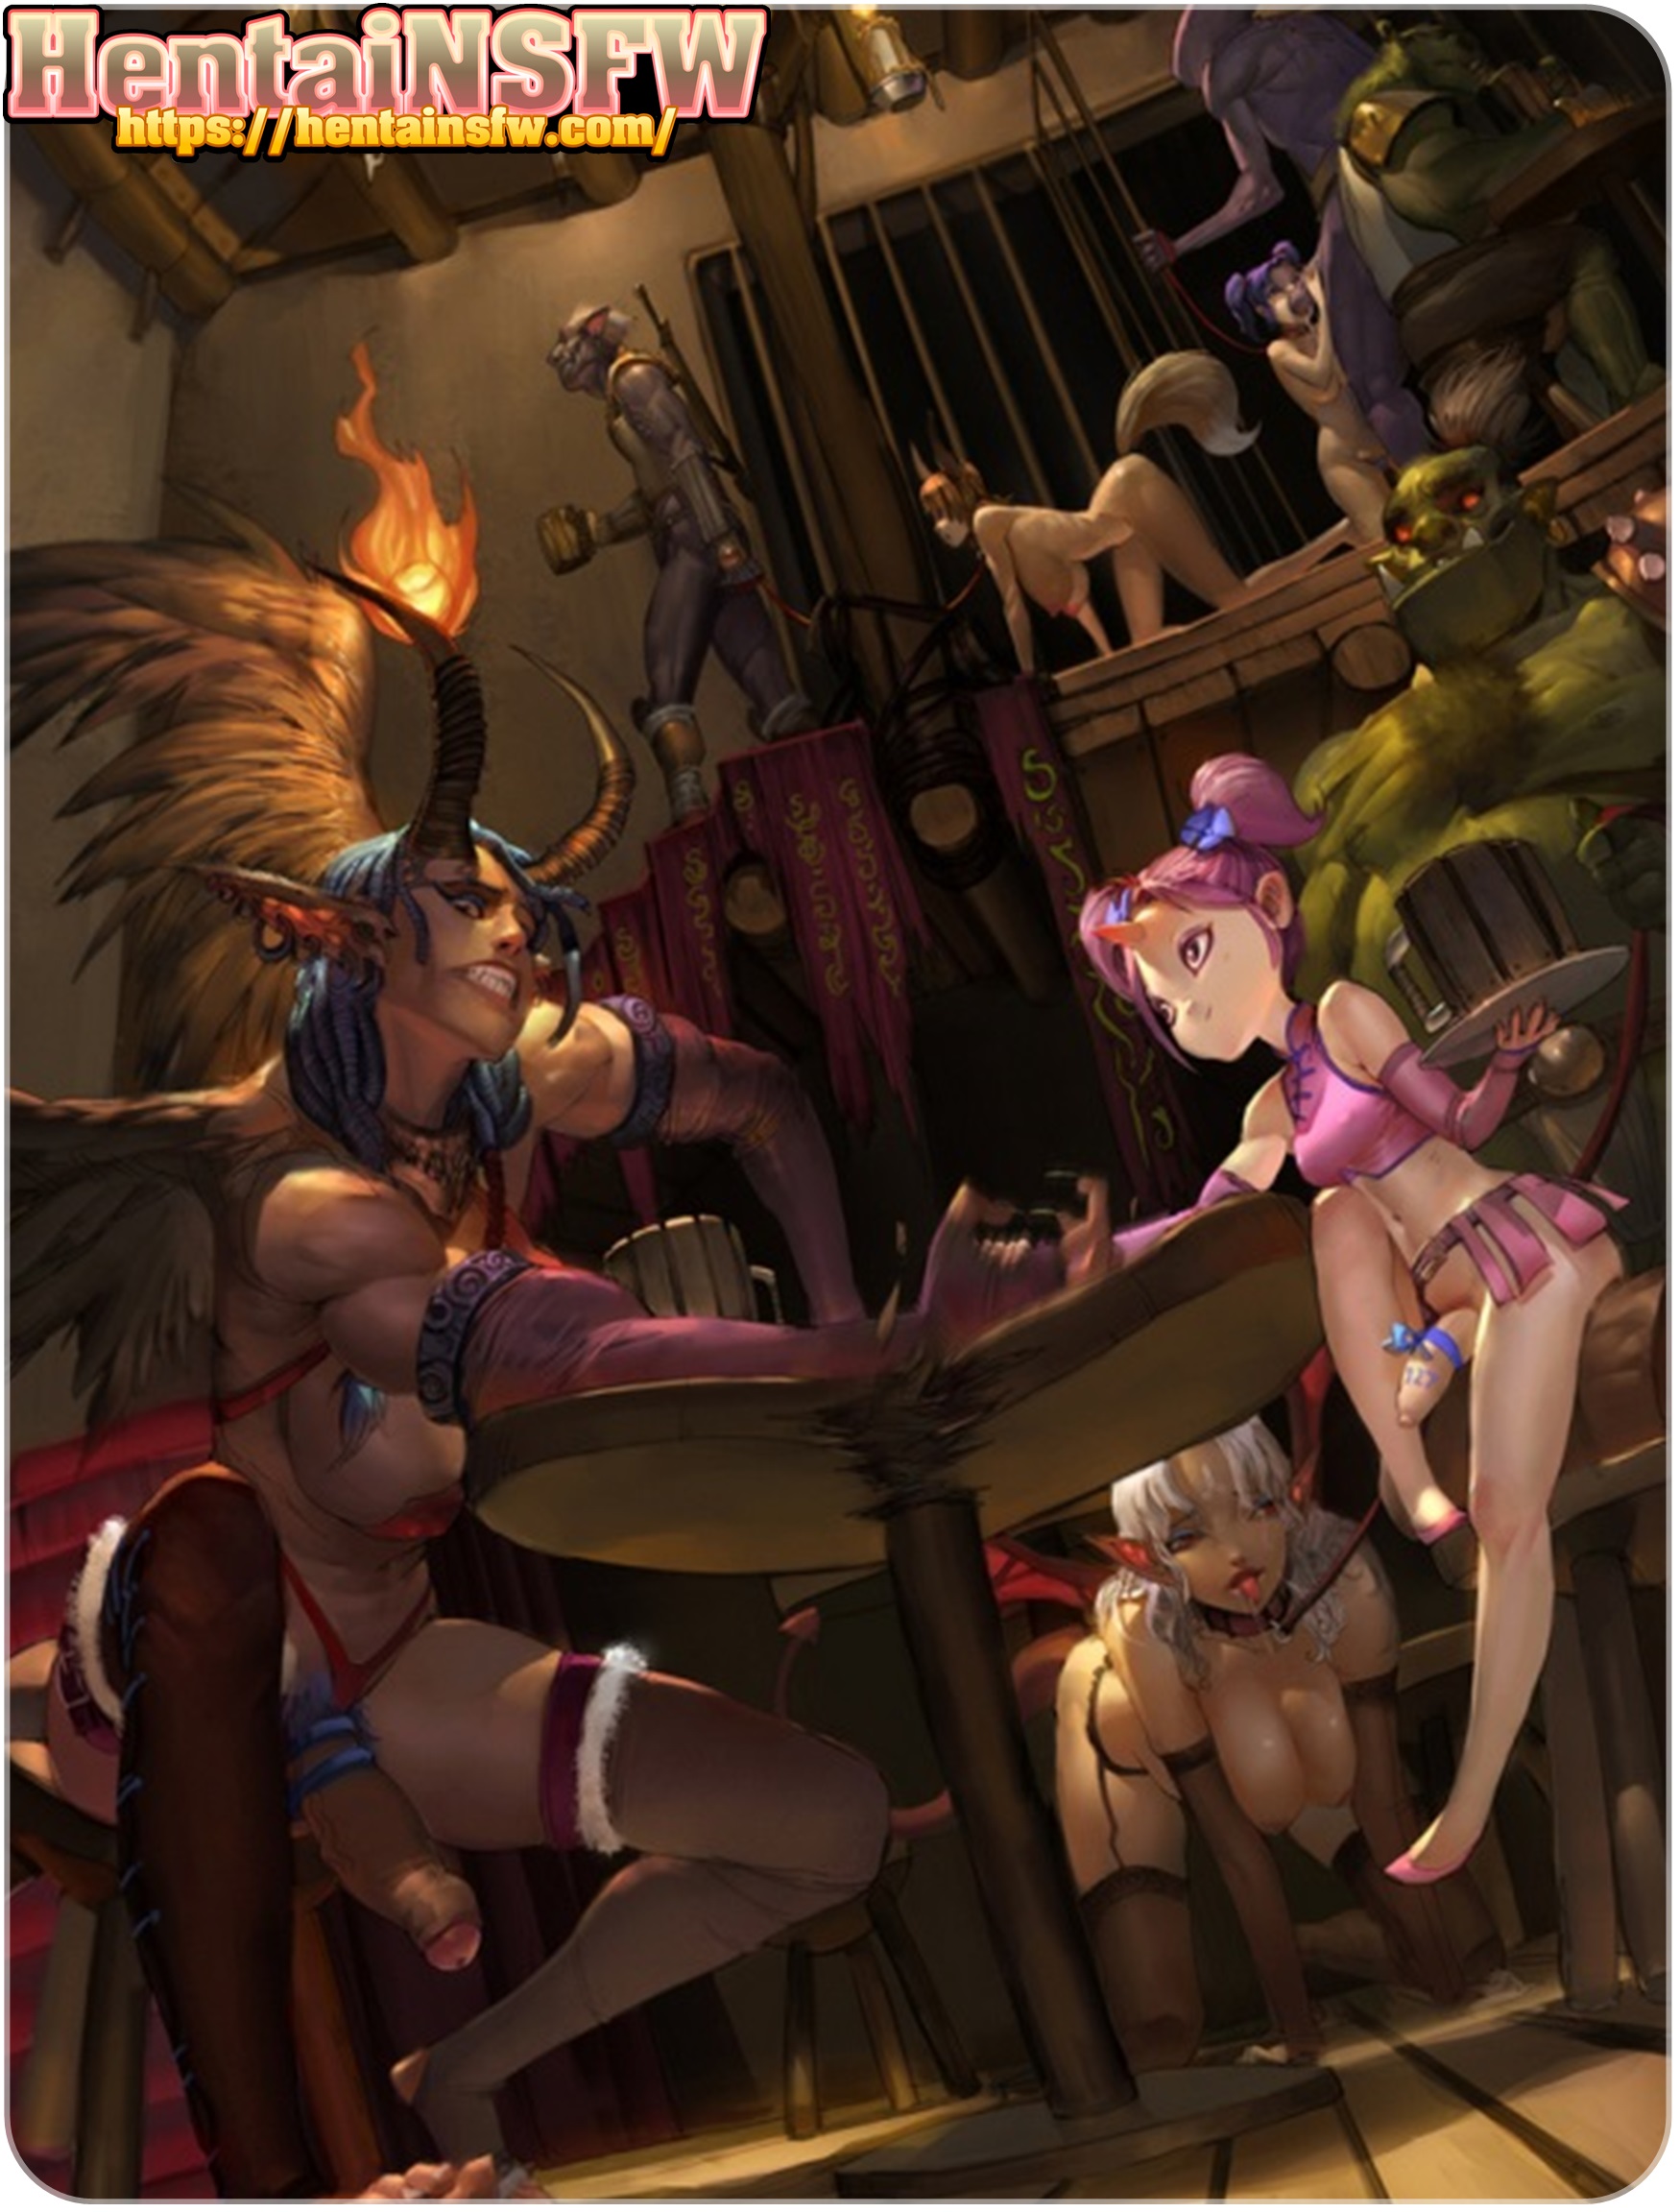 Full Color Uncensored Xxx Futa Oppai Hentai Fantasy Art Of Futanari Babes In A Sex Game Tavern